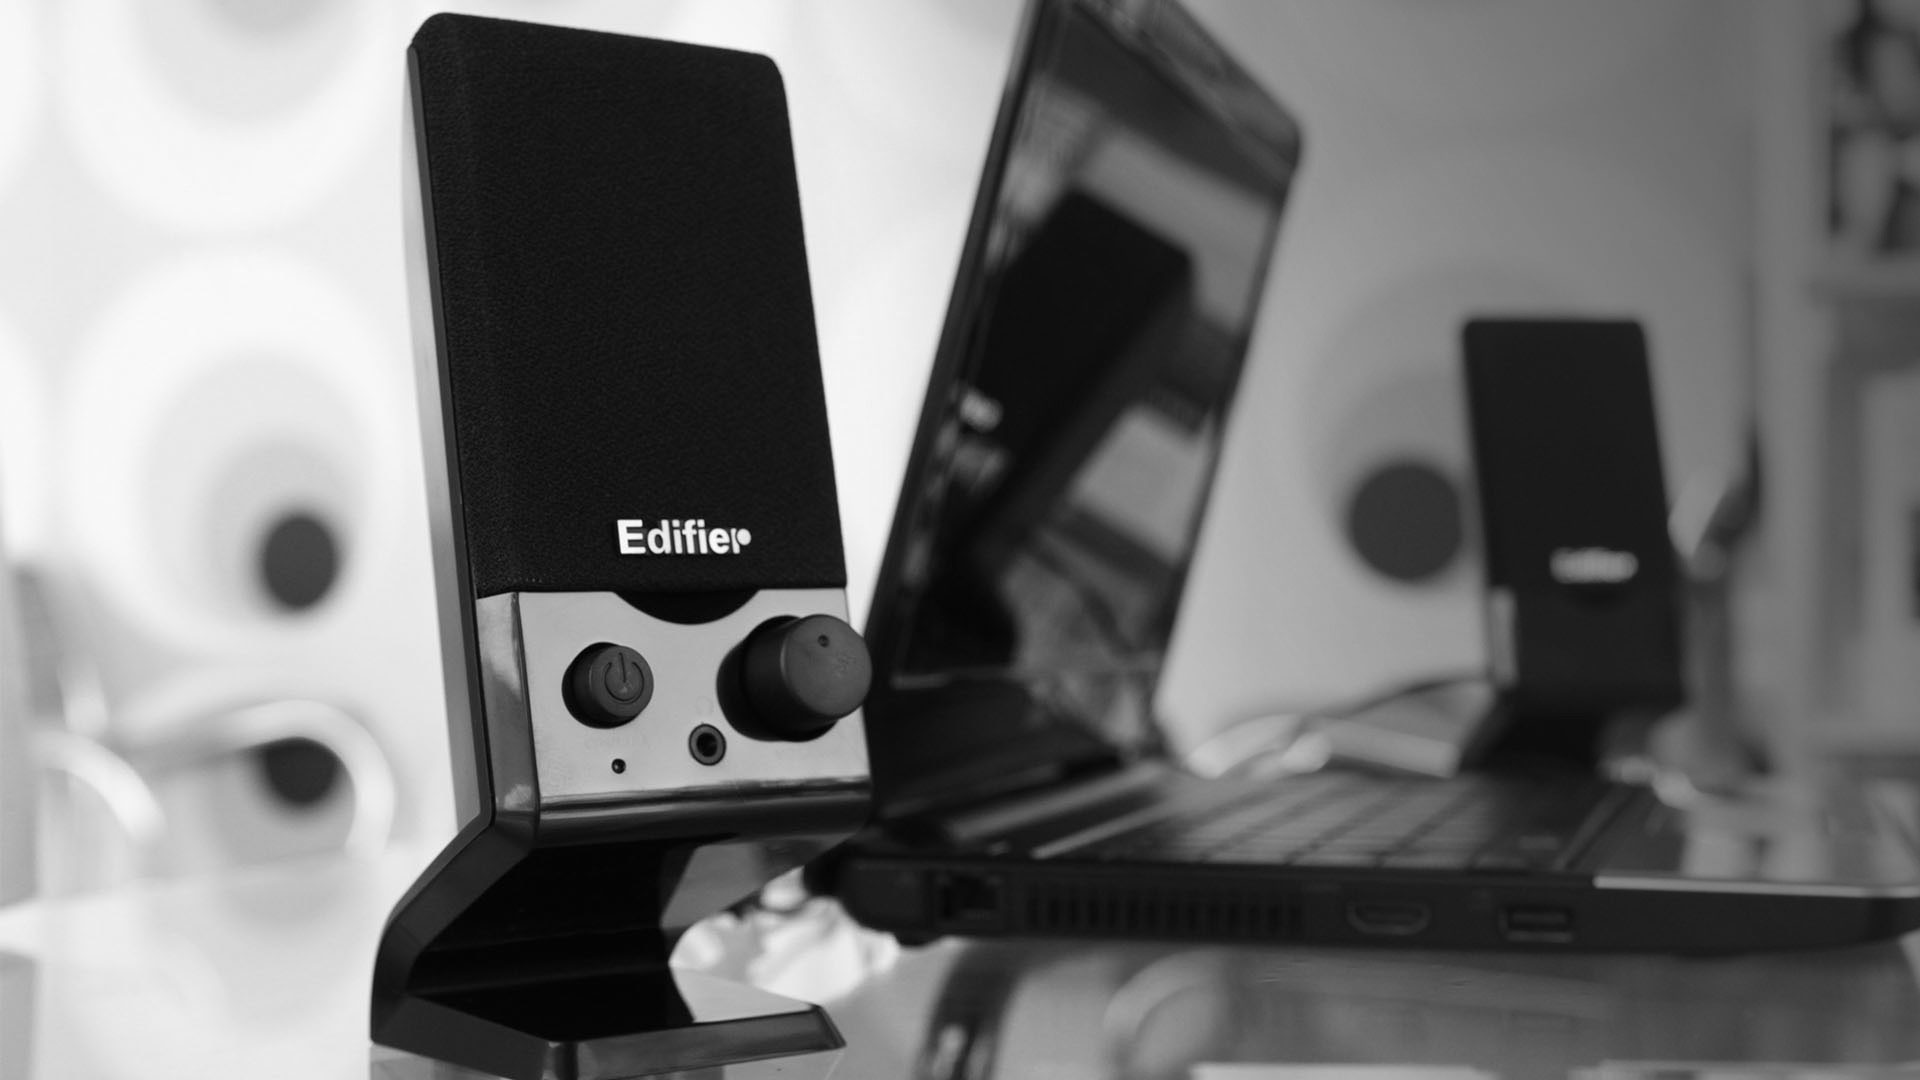 Edifier M1250 2.0 USB Powered Compact Multimedia Speakers – 3.5mm AUX/Flat Panel Design Satellites/Built in Power/Volume controls/Black